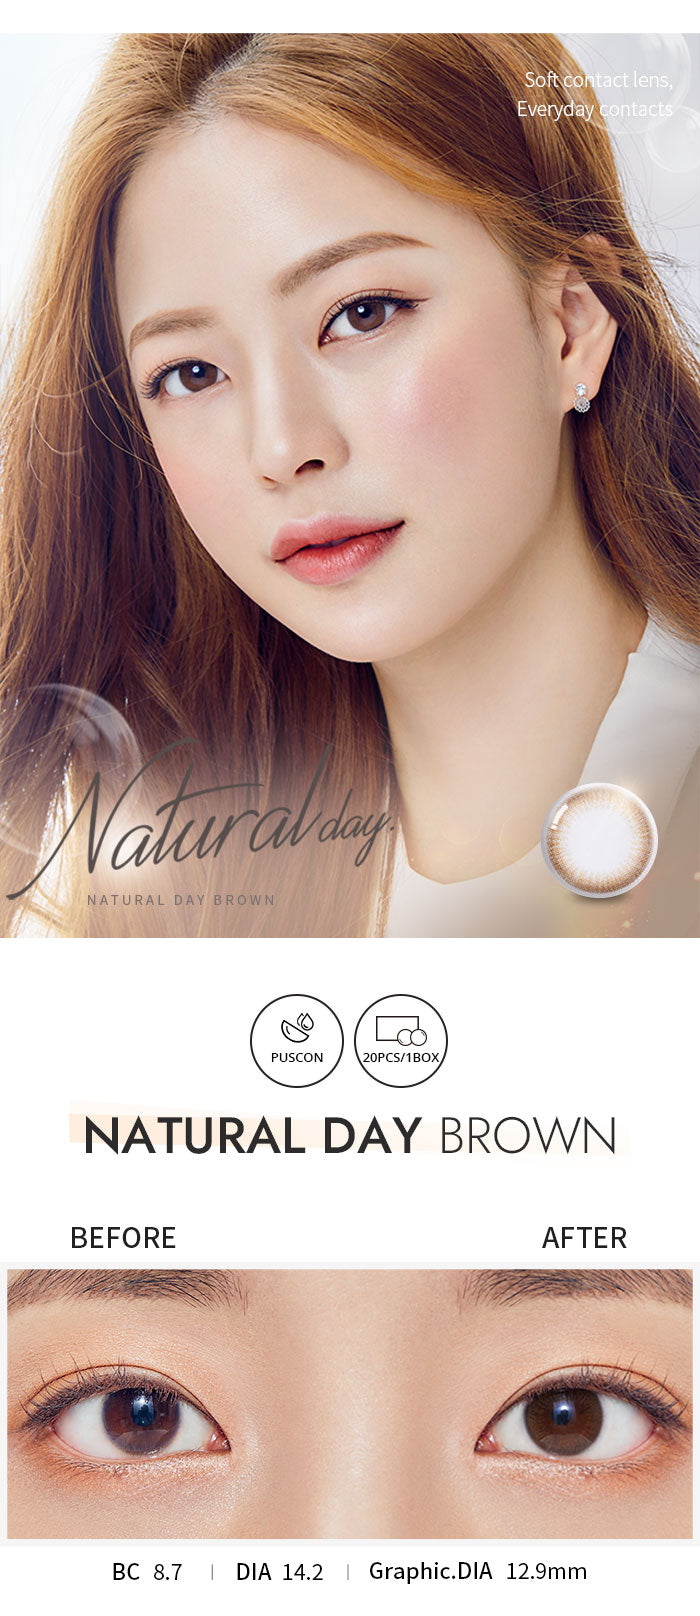 [Ready] O-Lens Natural Day Brown | Daily 10 Pairs